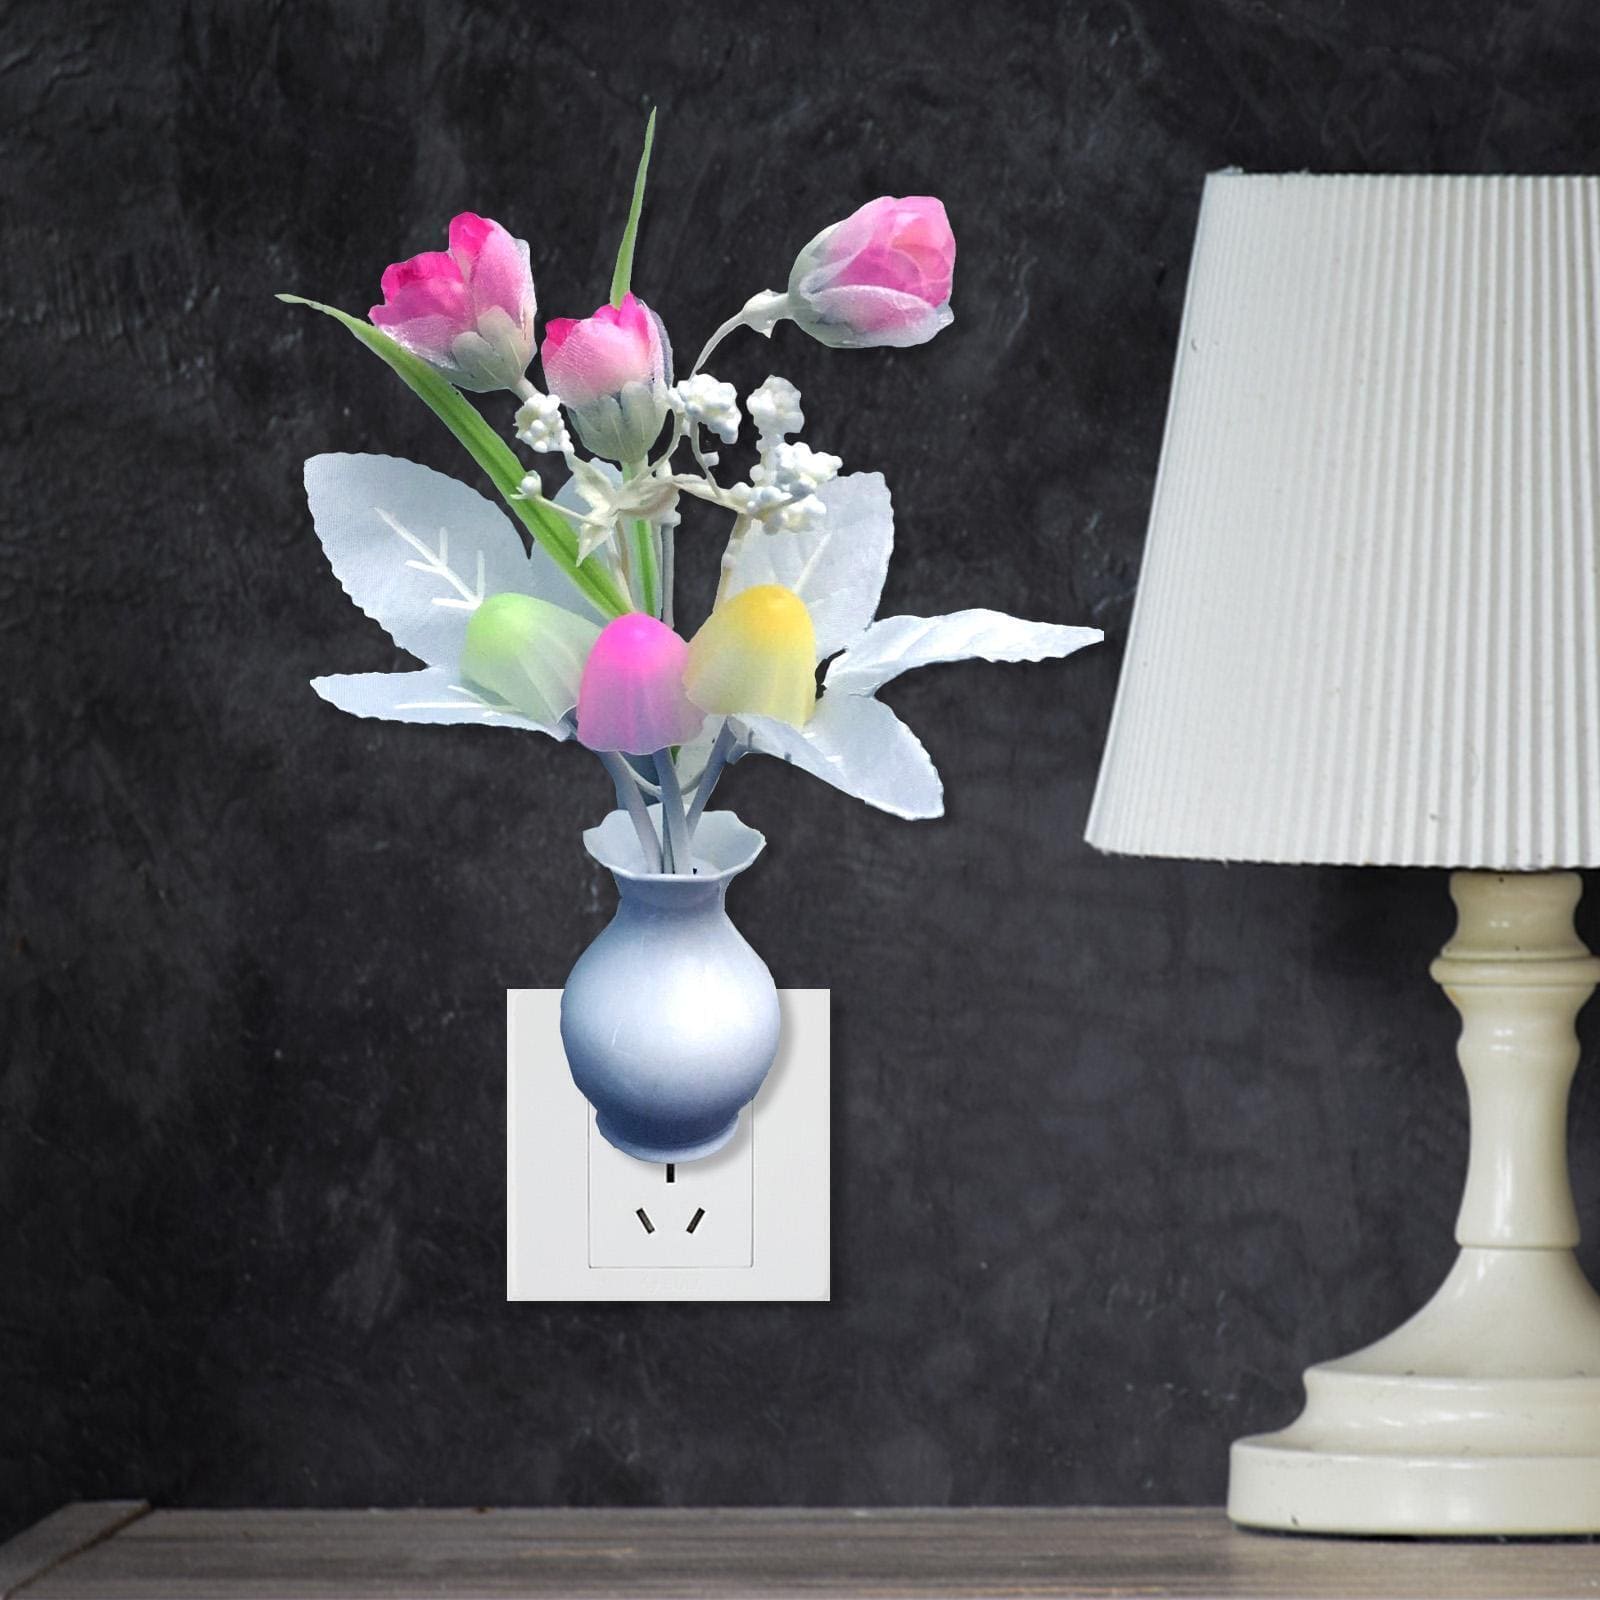 Led Pot Lamp, Mini Colorful LED Night Lights, Creative Sensor Lamp for Home, Room Decoration RGB Novelty Night Lamp